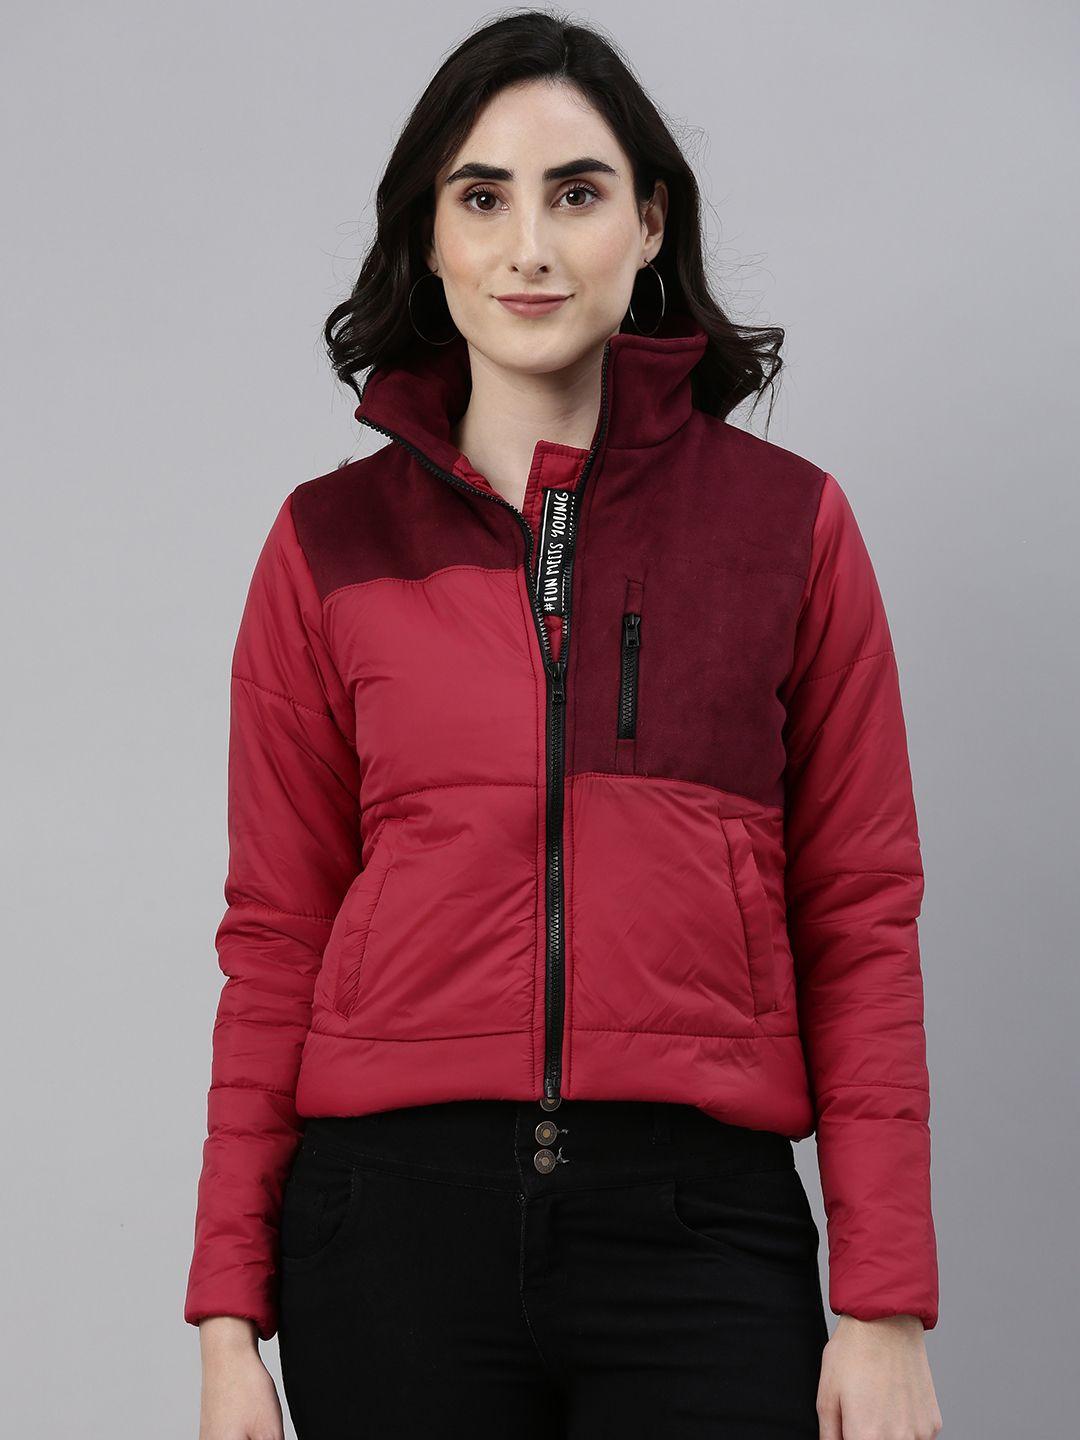 campus sutra women red maroon colourblocked windcheater outdoor padded jacket